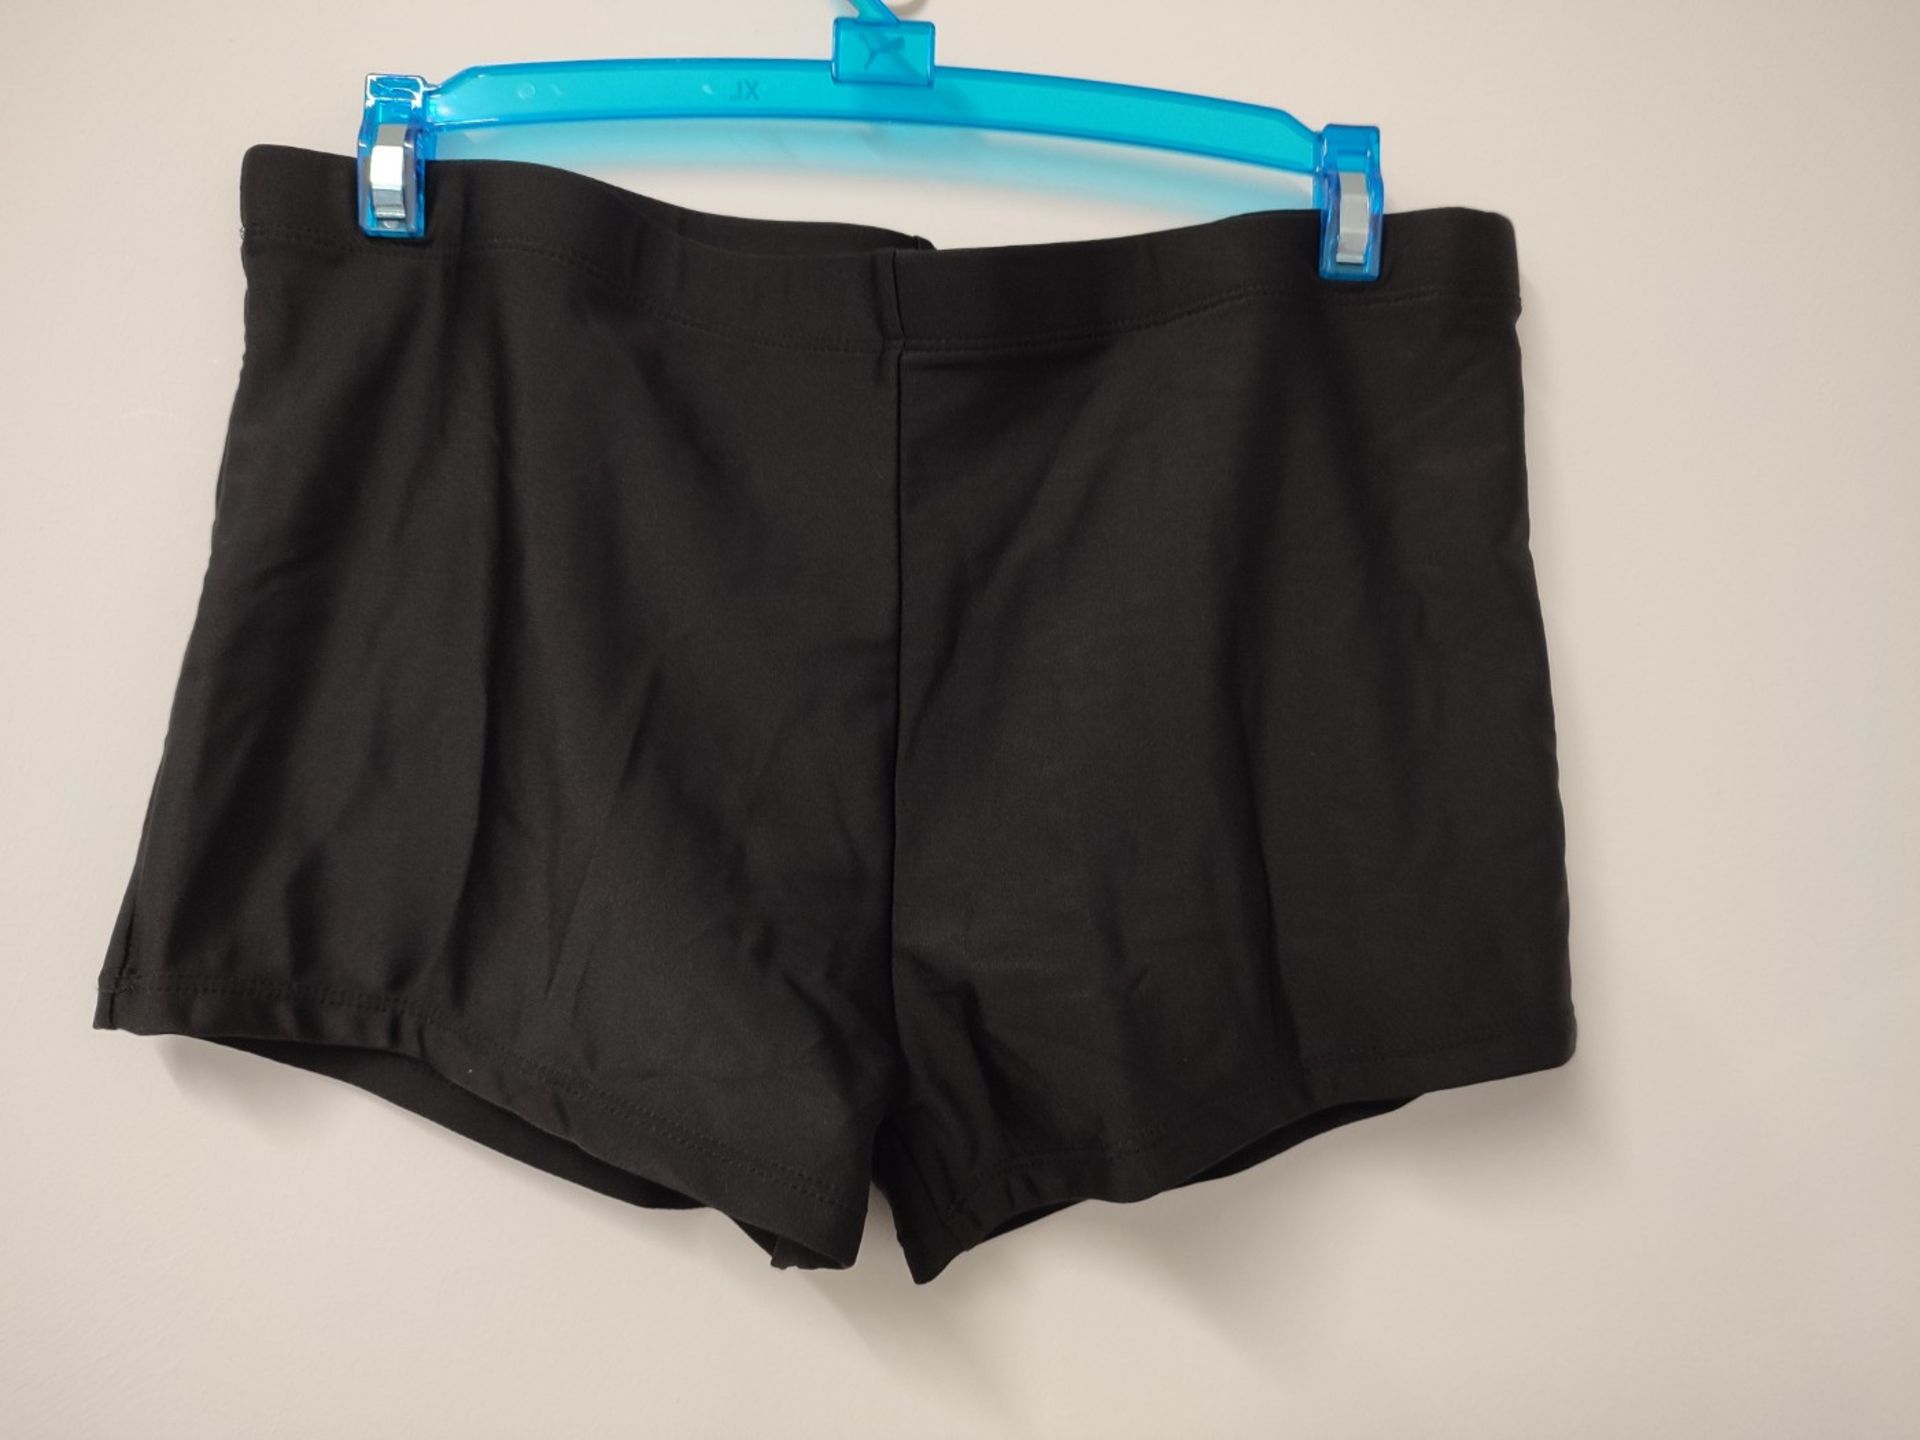 Octopus F5682 Oversized Swimwear Tankini Set with Hot Pants Size 34-66, Tankini black, - Image 2 of 2